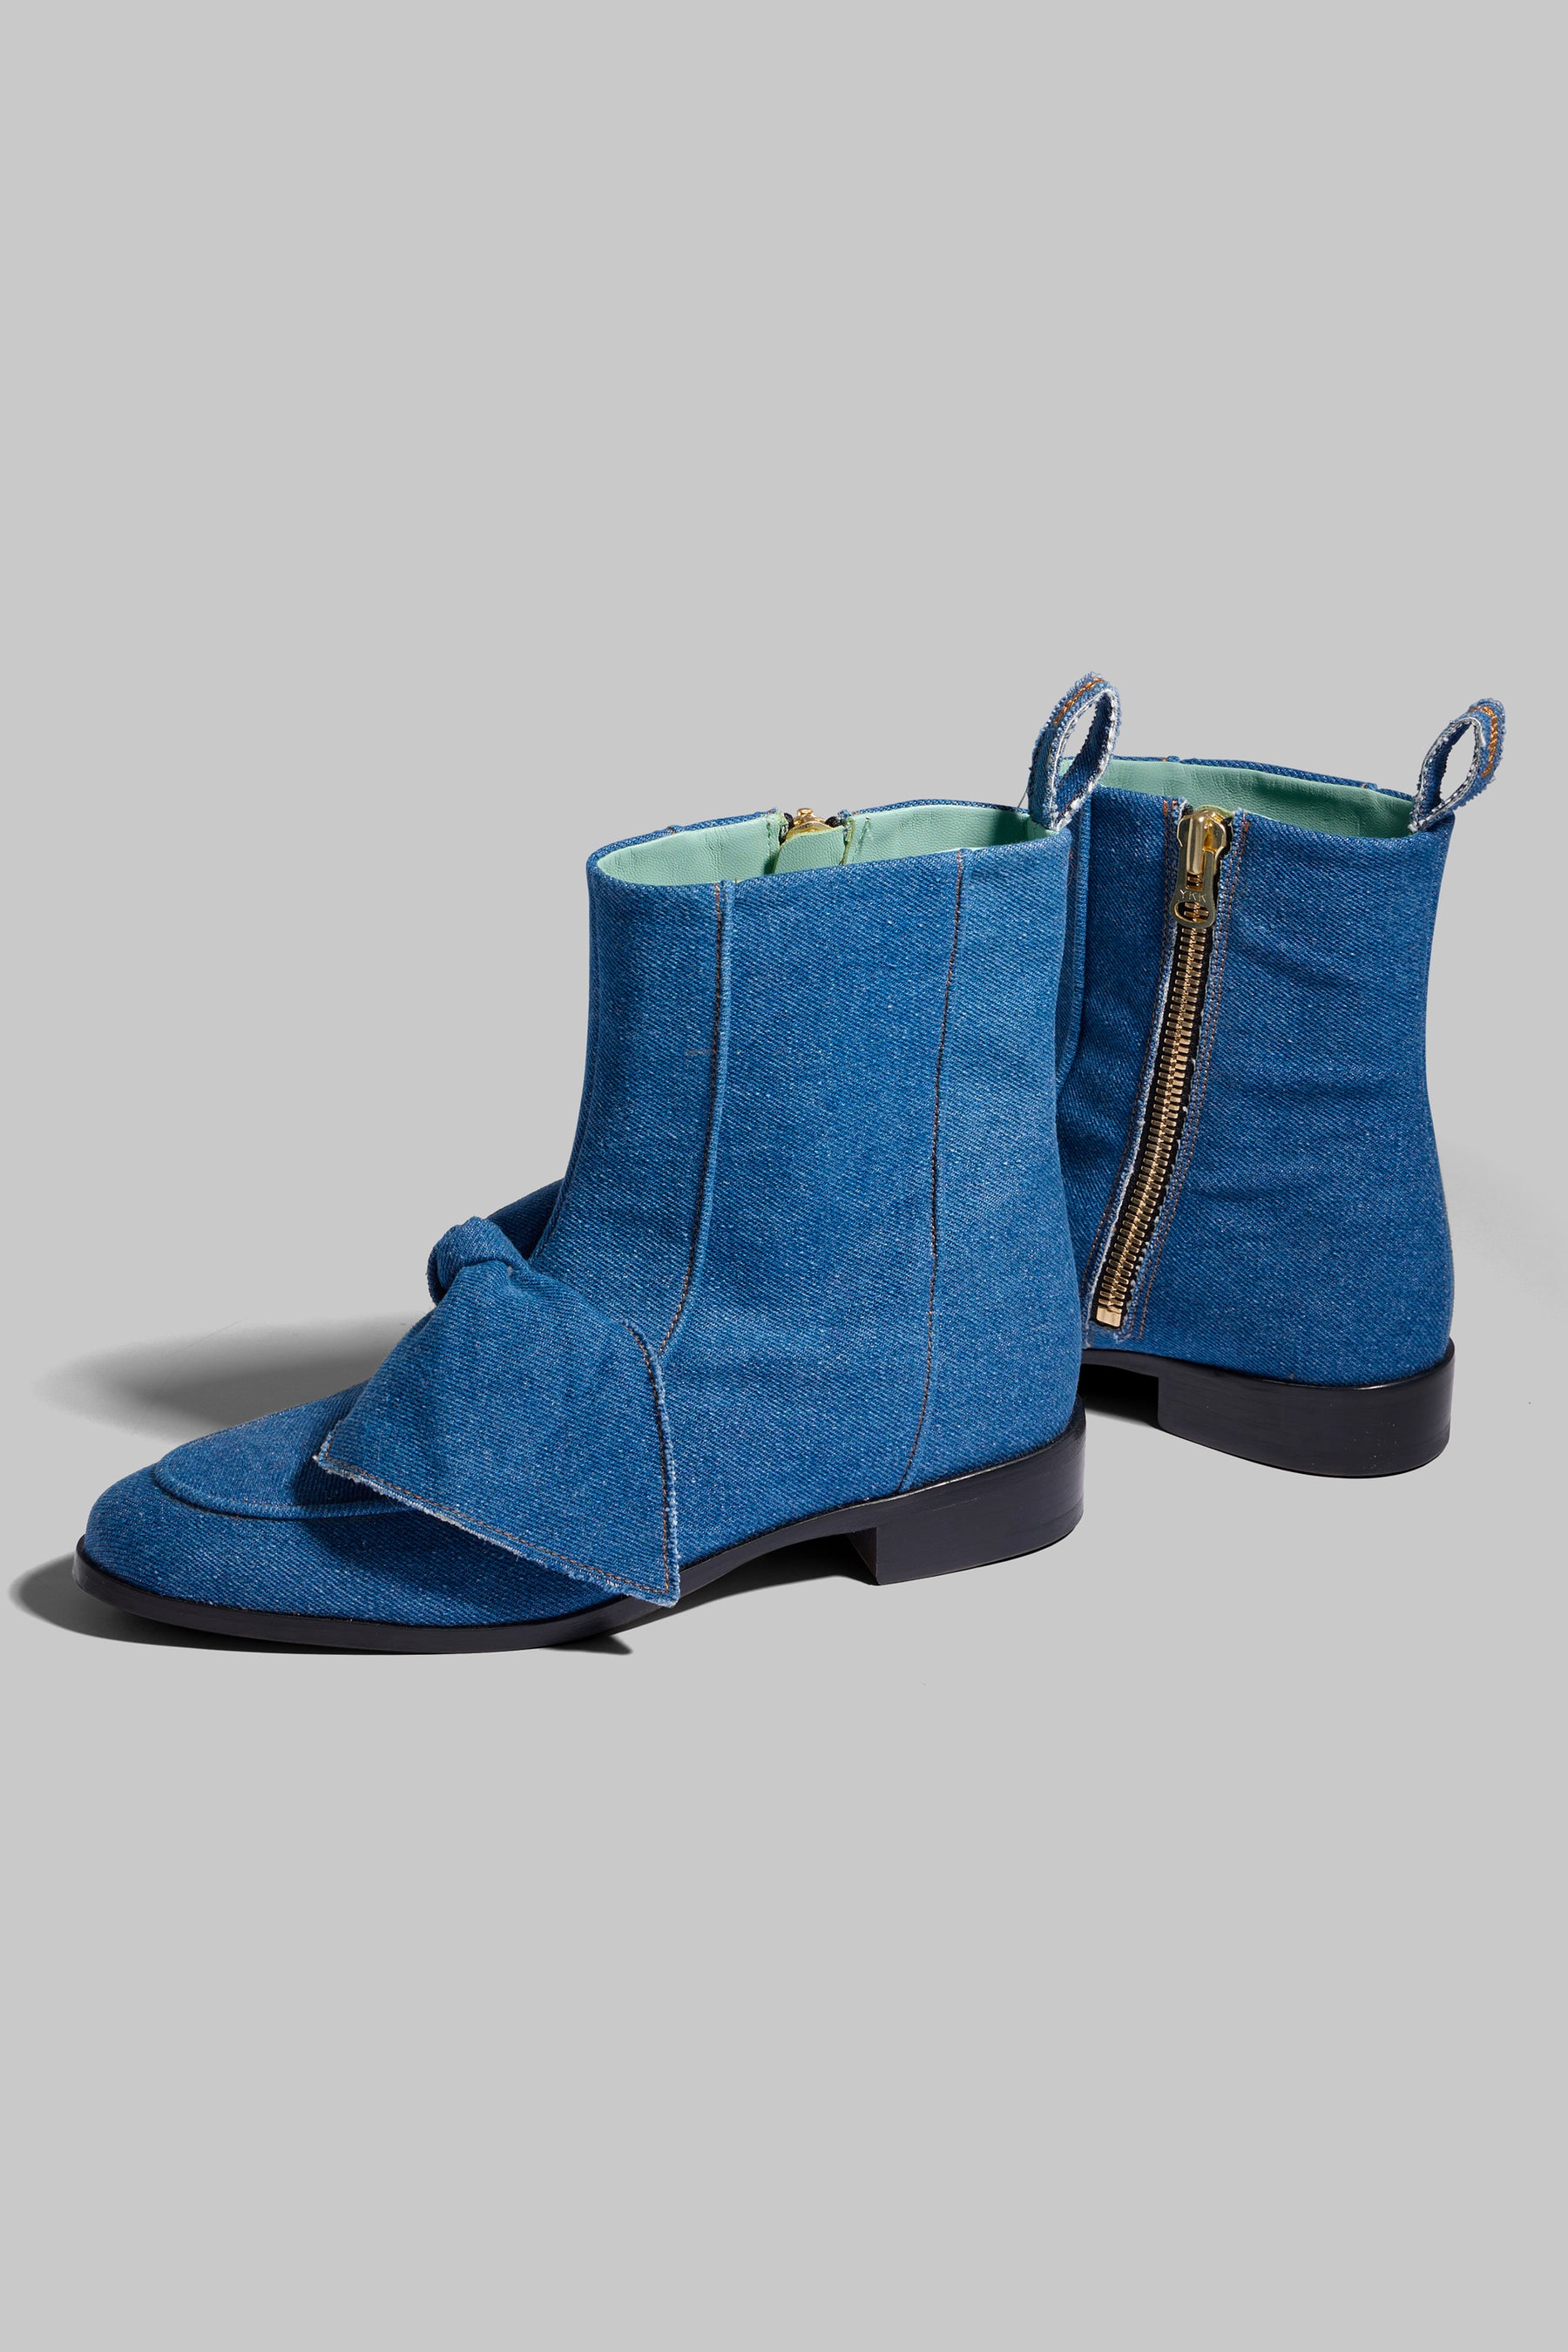 BB boots in blue denim